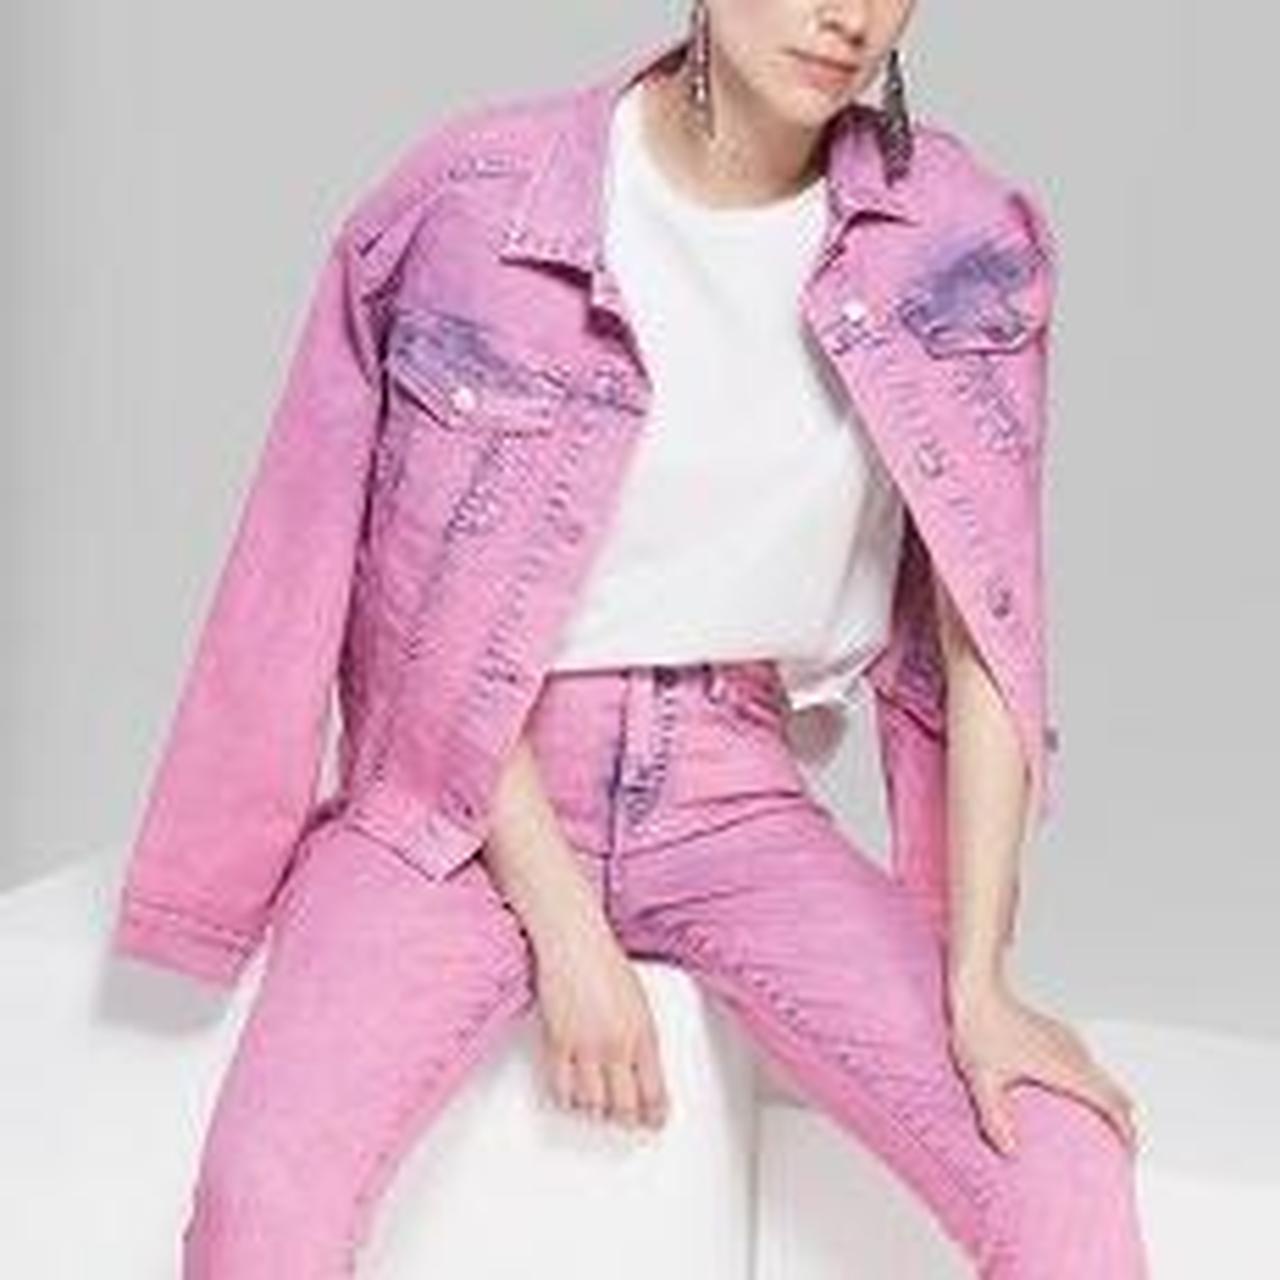 pink wild fable jacket - Depop